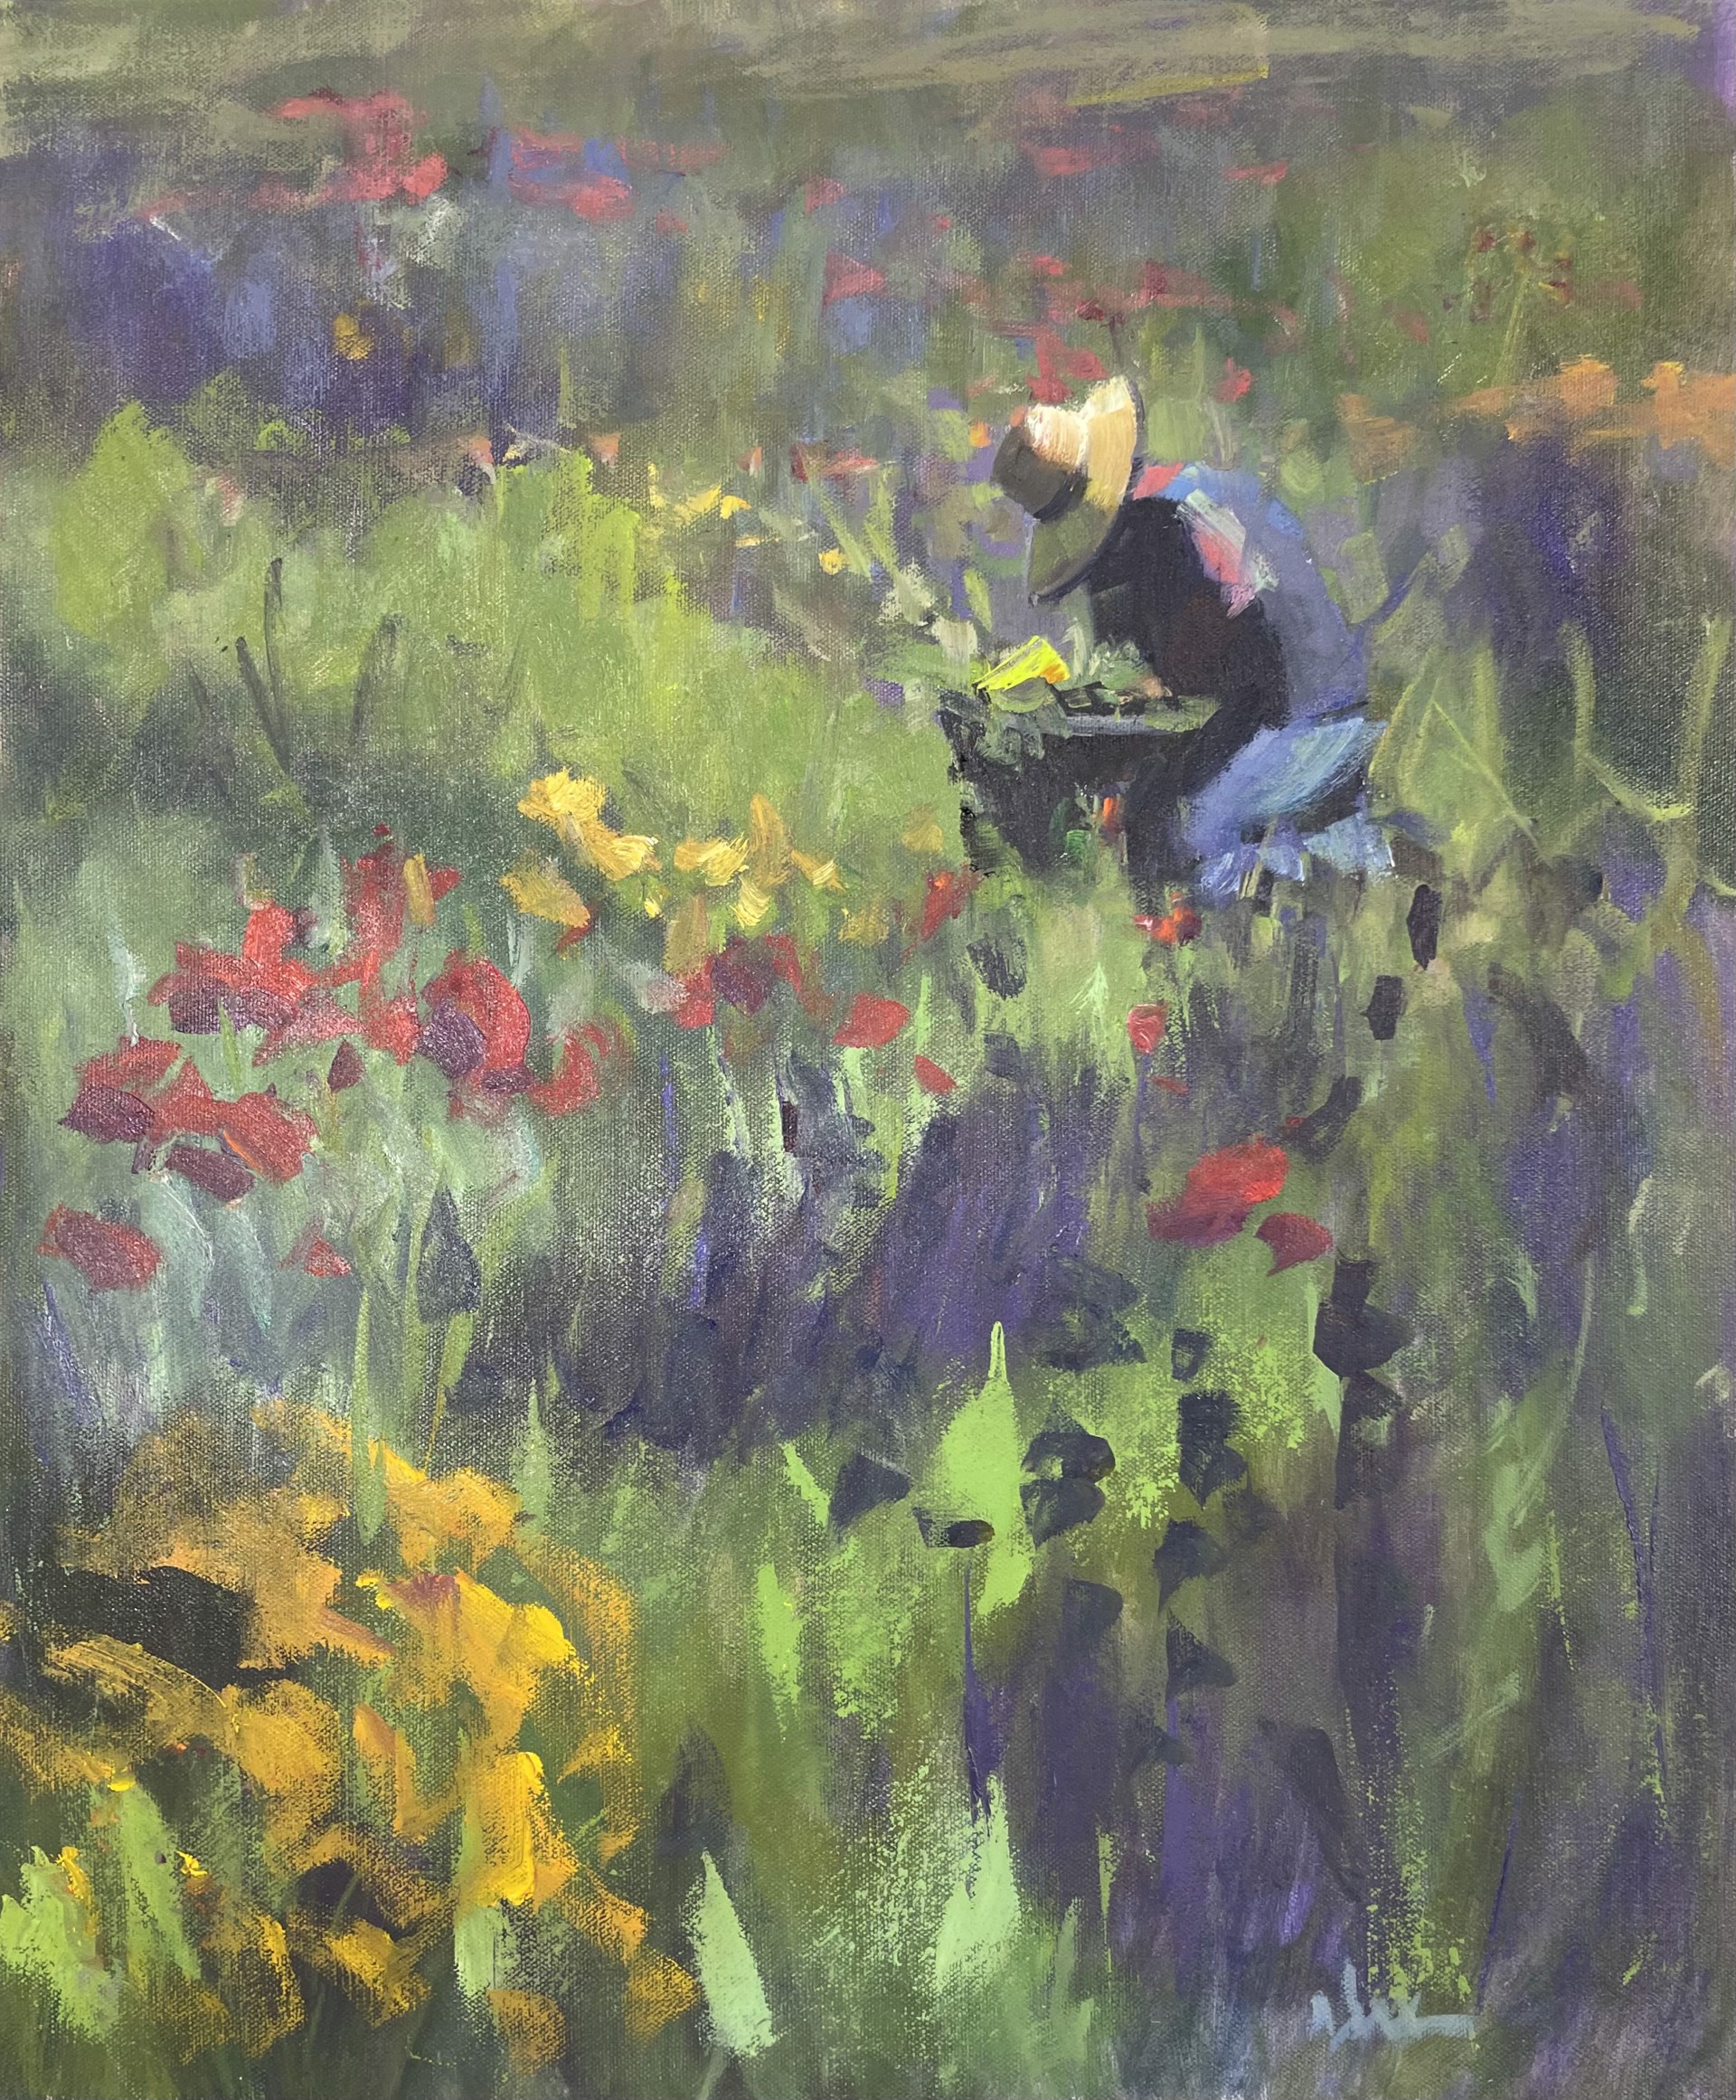 The Gardener by Nancy Lee